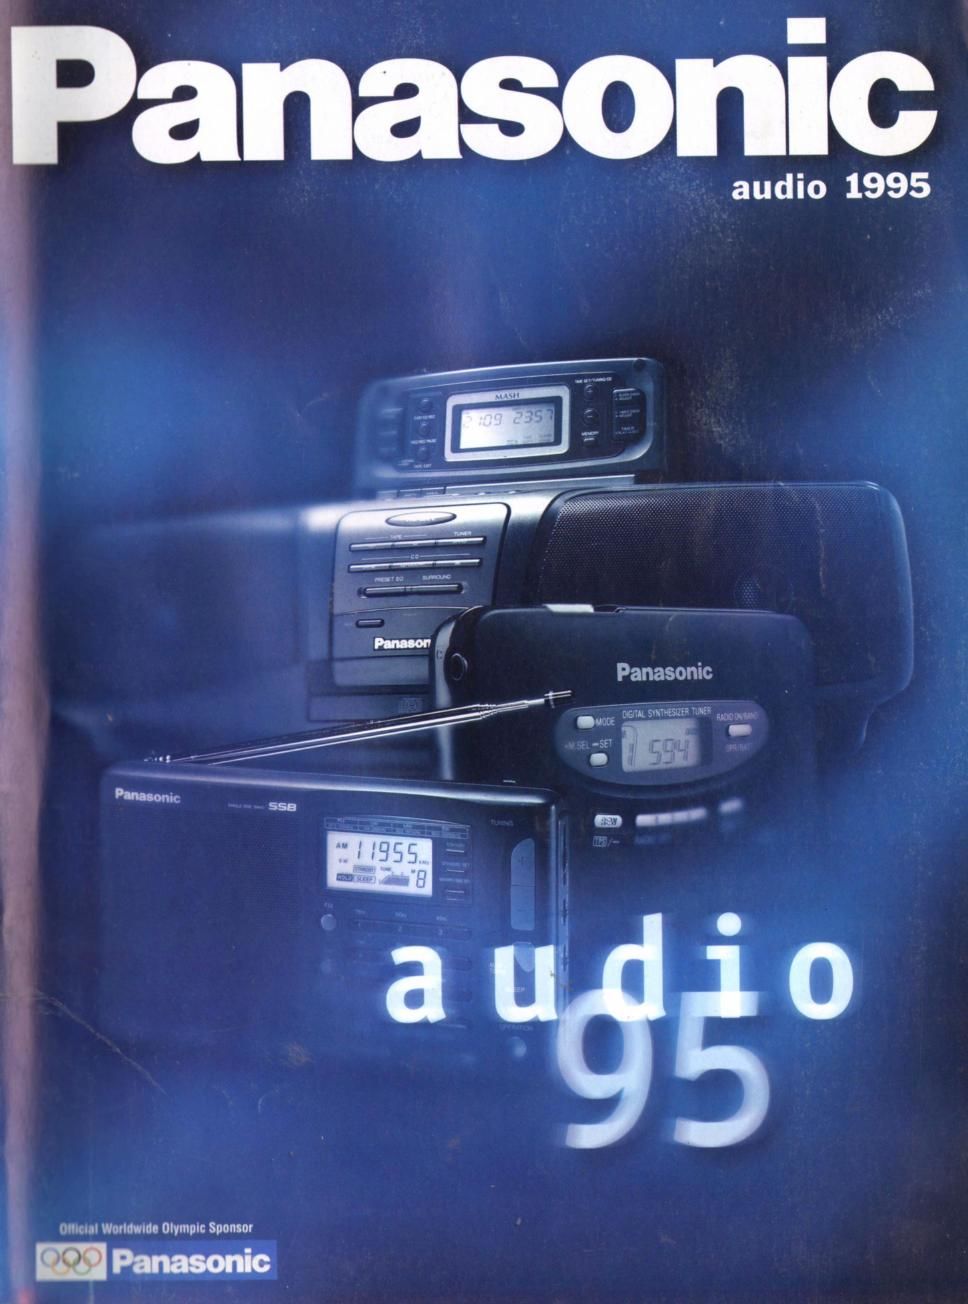 panasonic catalogs 1995 panasonic audio